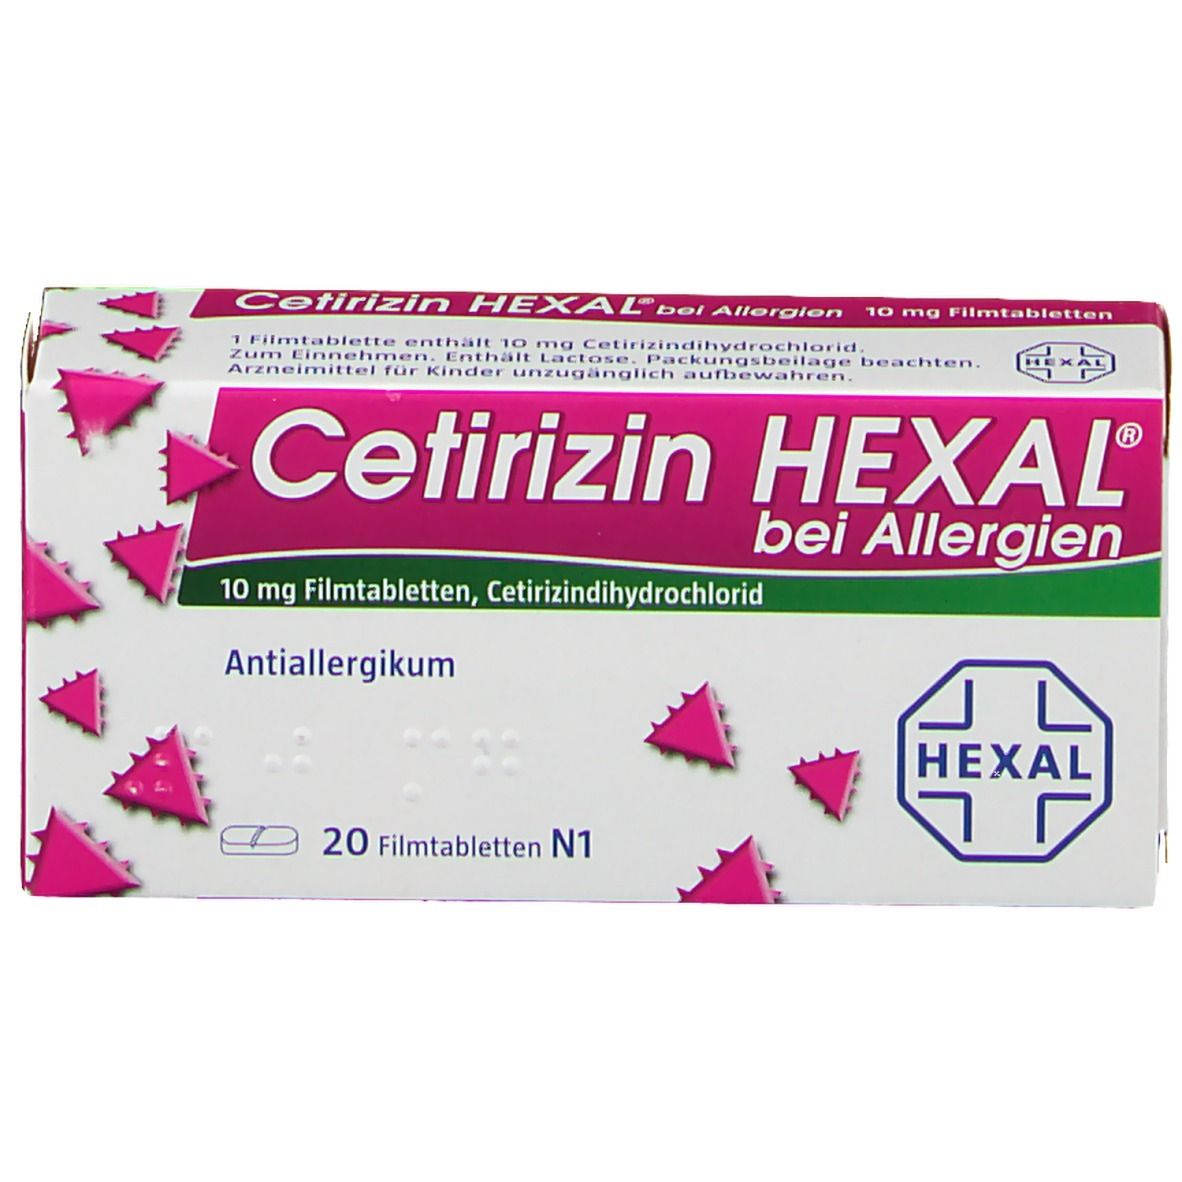 Ist Cetirizin Hexal pflanzlich?